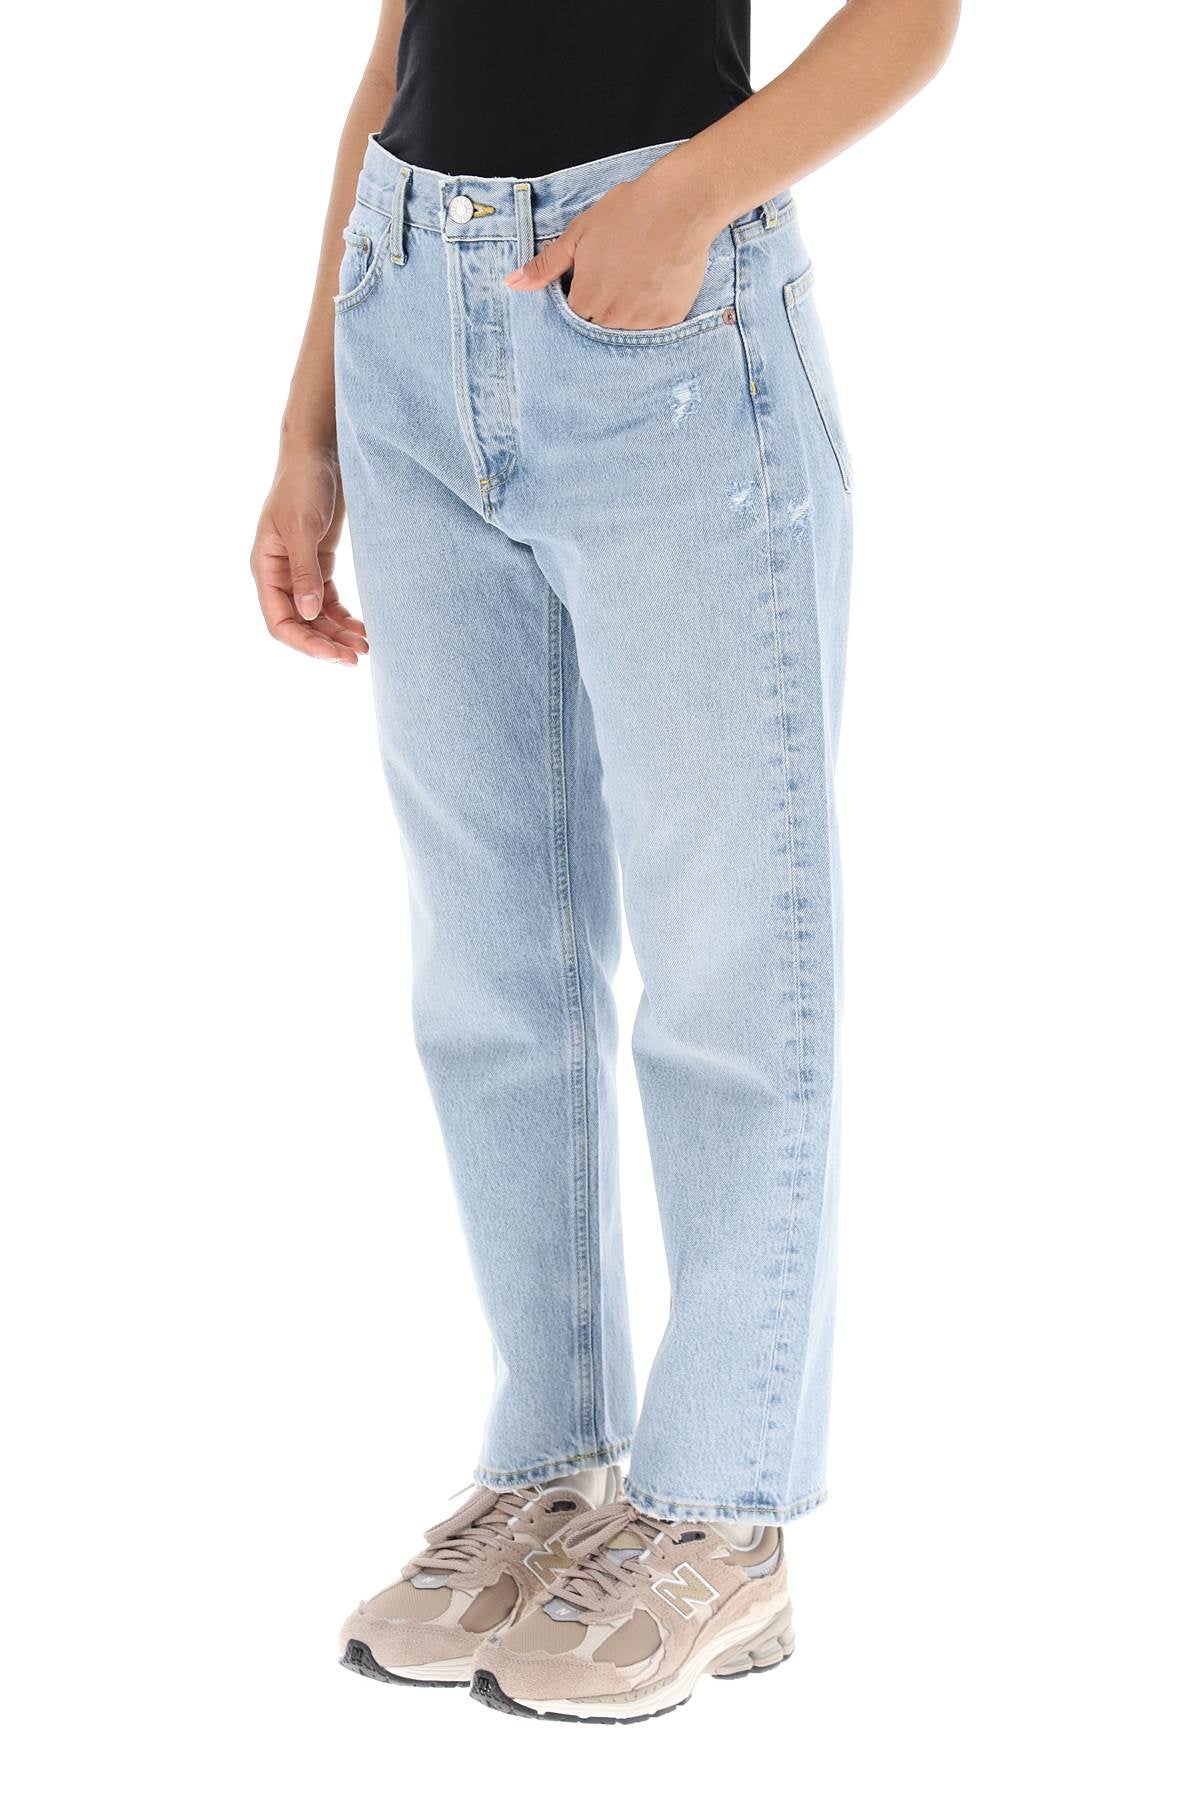 Agolde 'parker' jeans with light wash-3